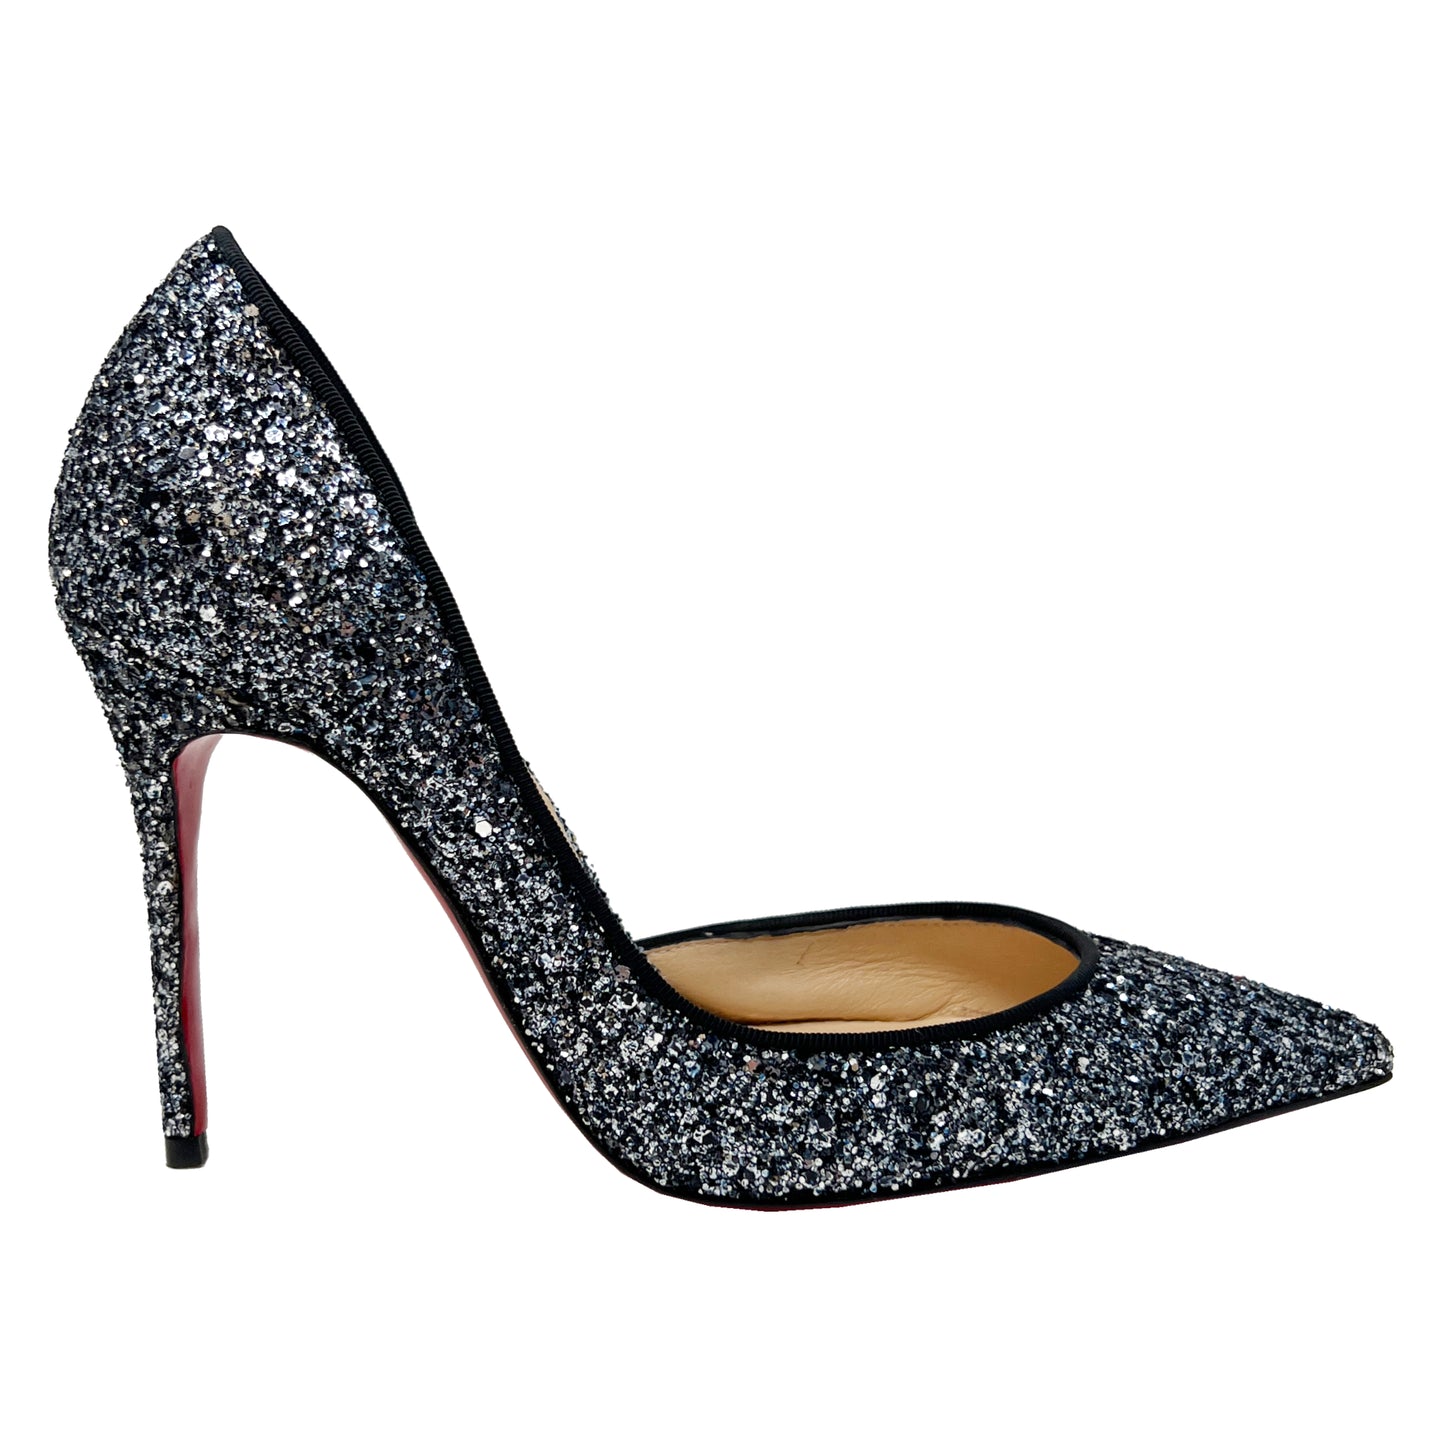 Christian Louboutin Iriza Blue Silver Glitter Pointed Toe D'Orsay Pumps Heels Size EU 35.5